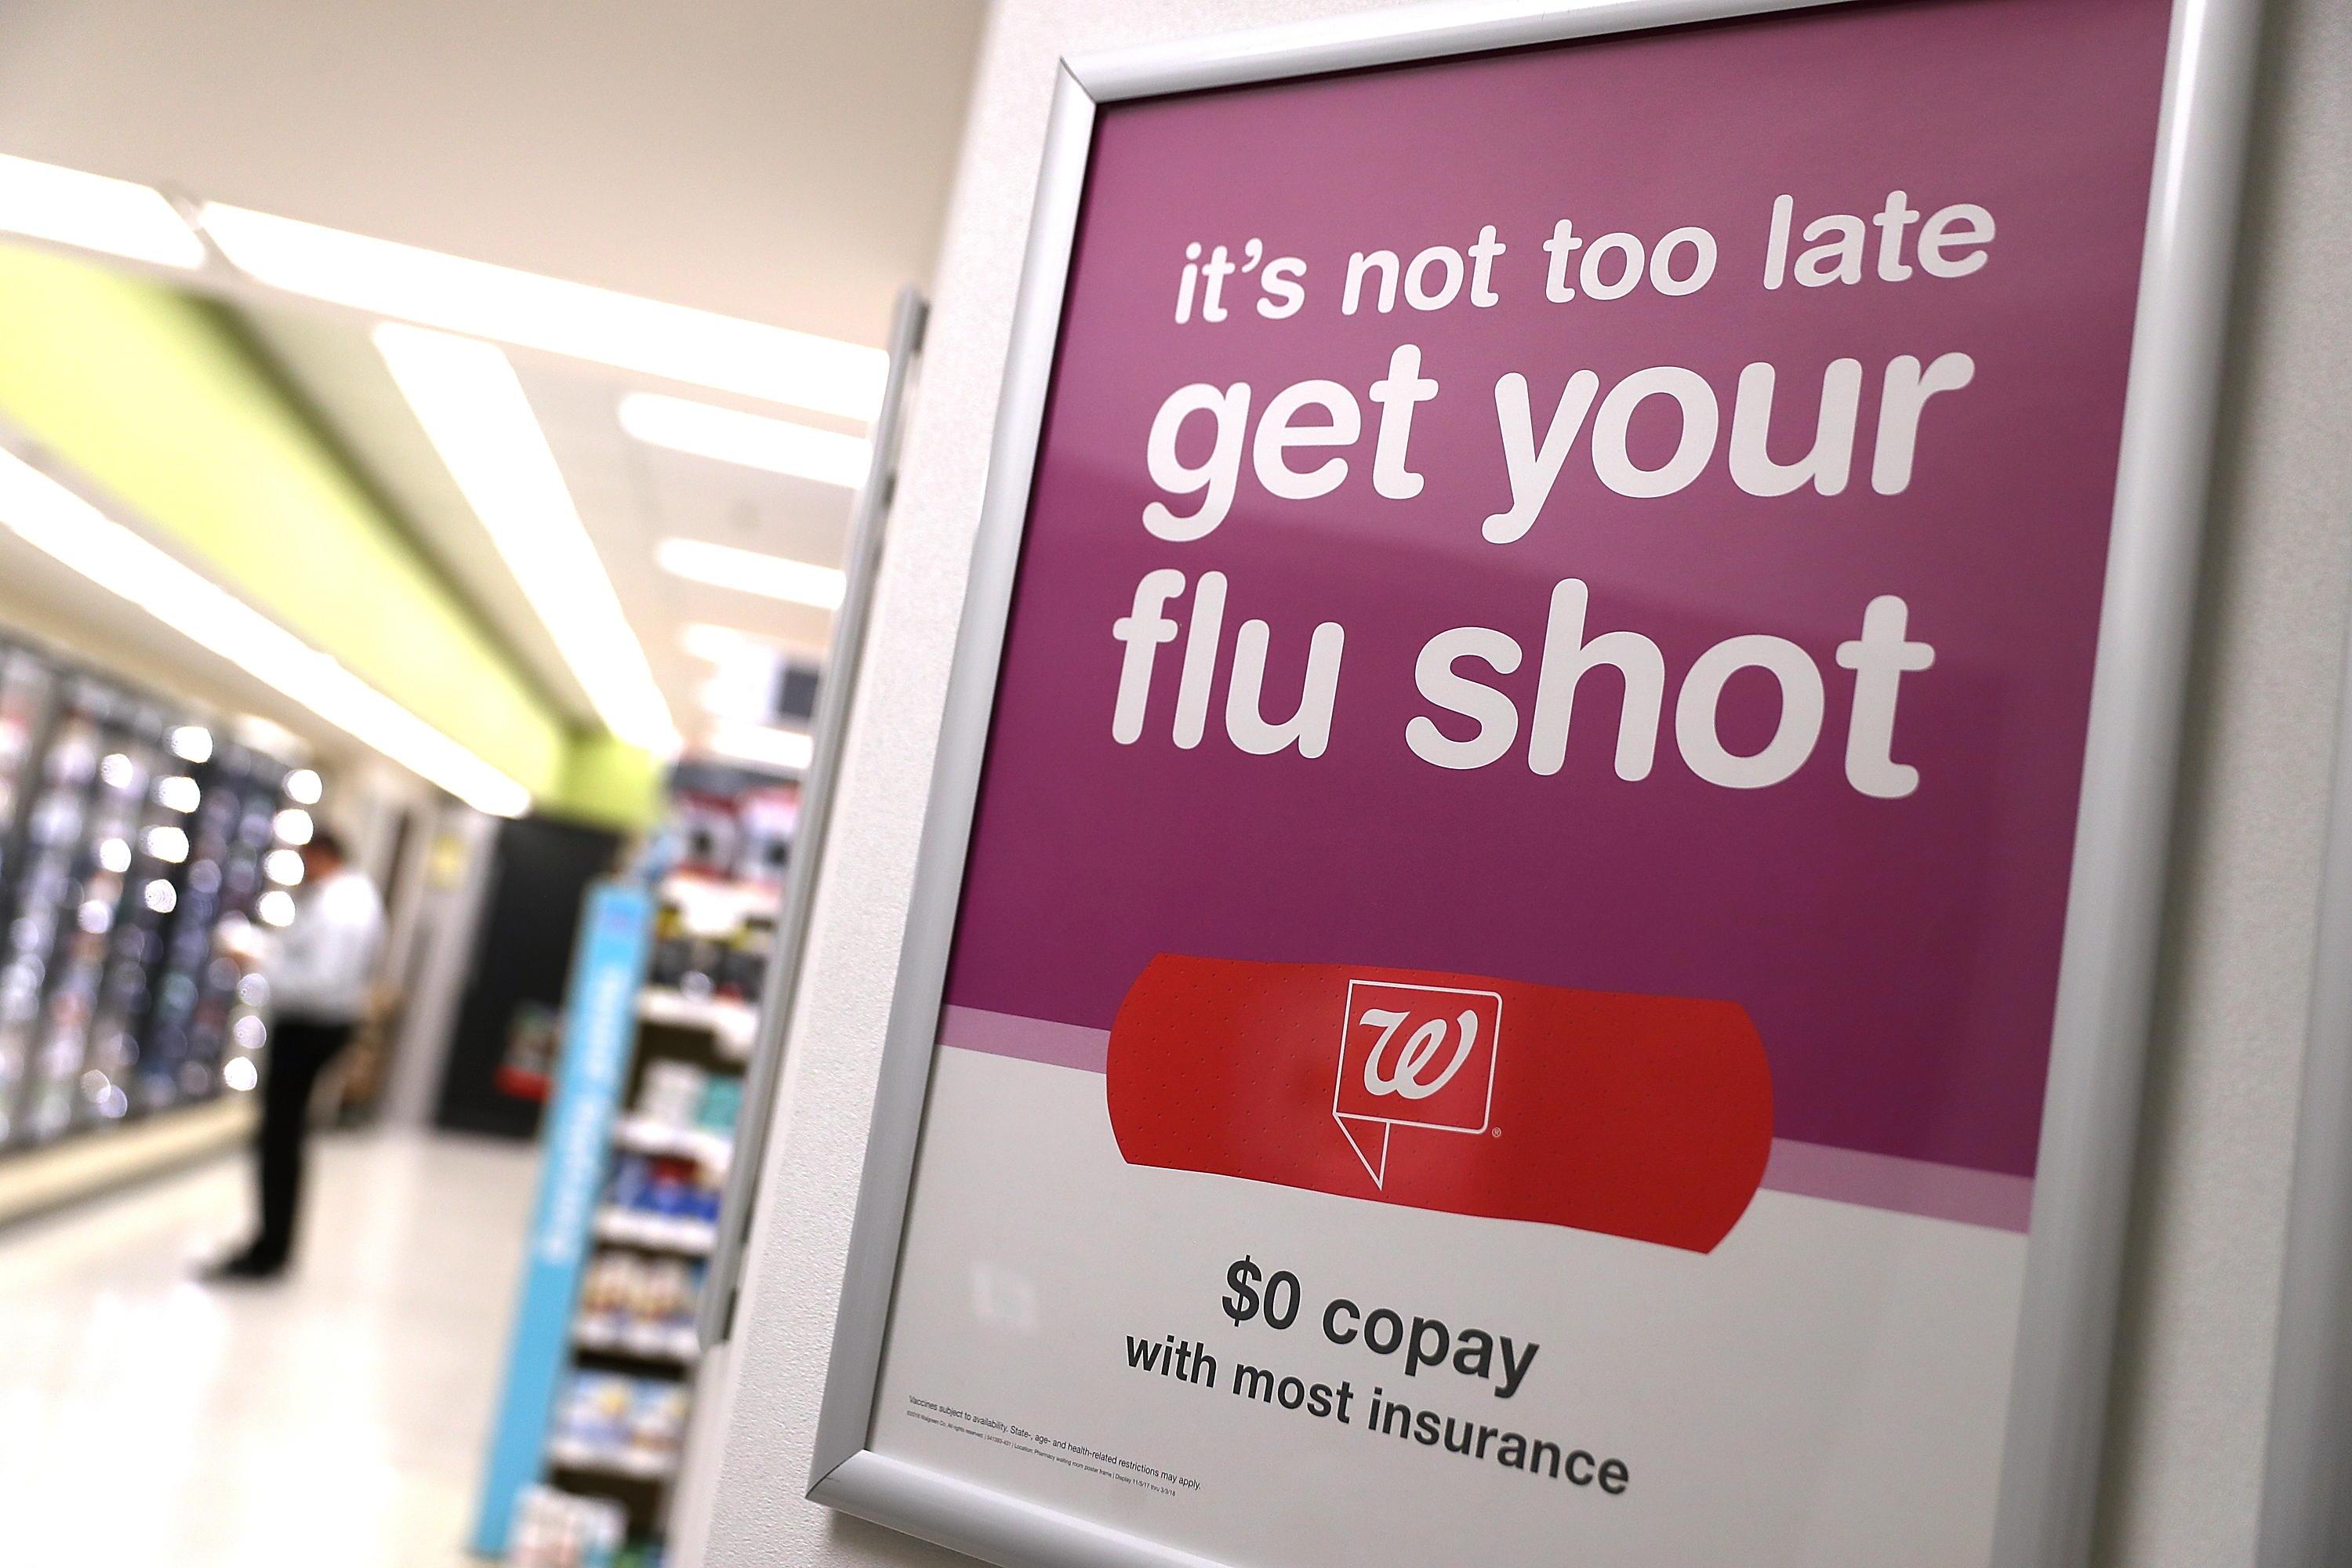 Nassau County Sees 'Unprecedented Number' Of Flu Cases